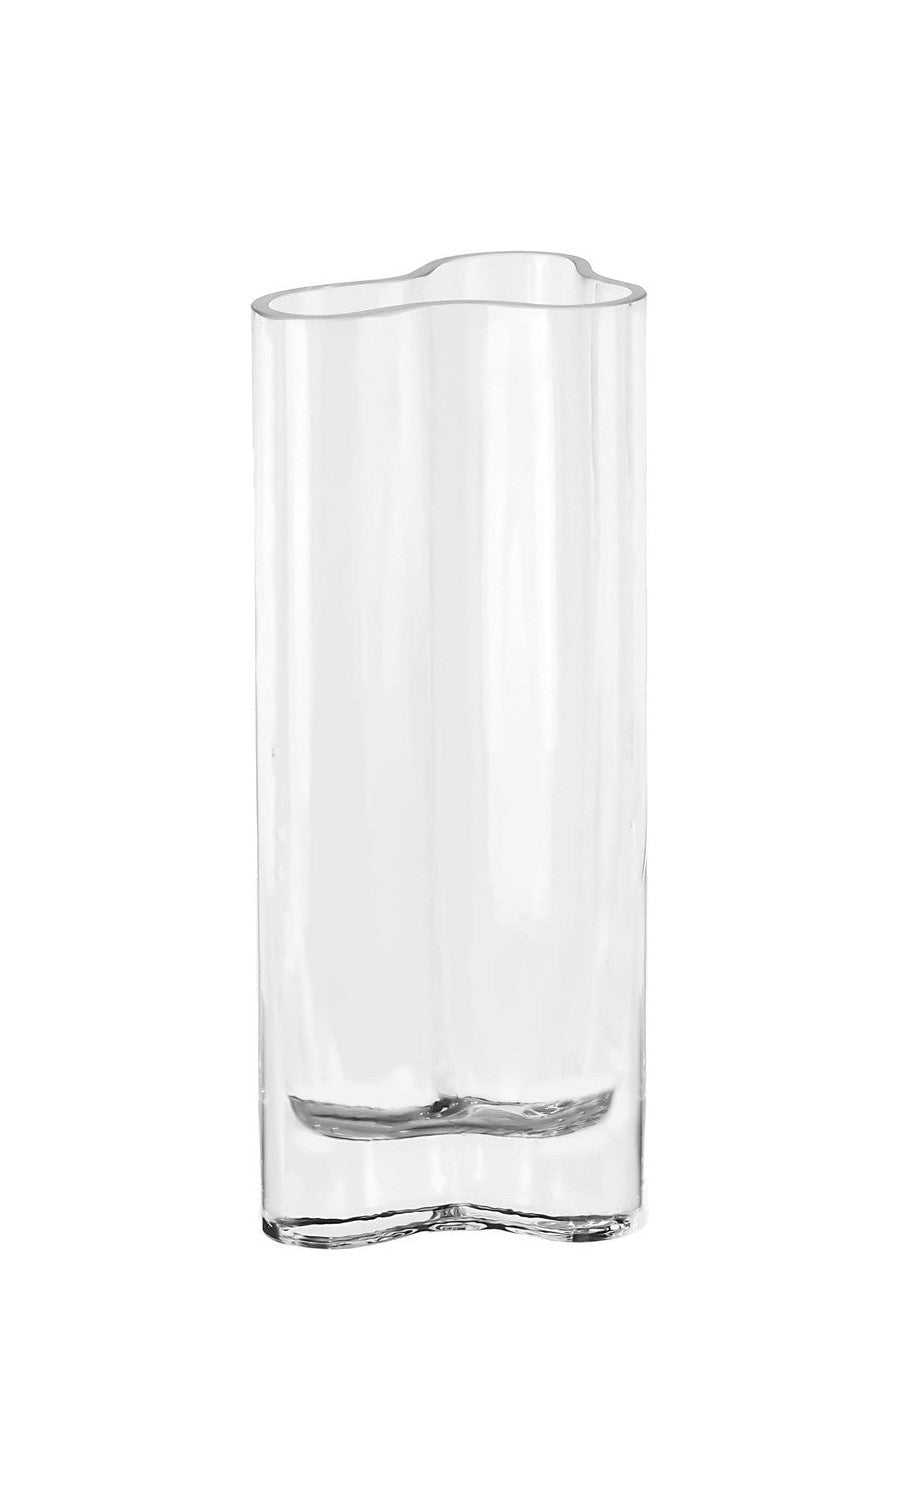 Aalto geïnspireerde slanke moderne glazen vaas, Coral26cl